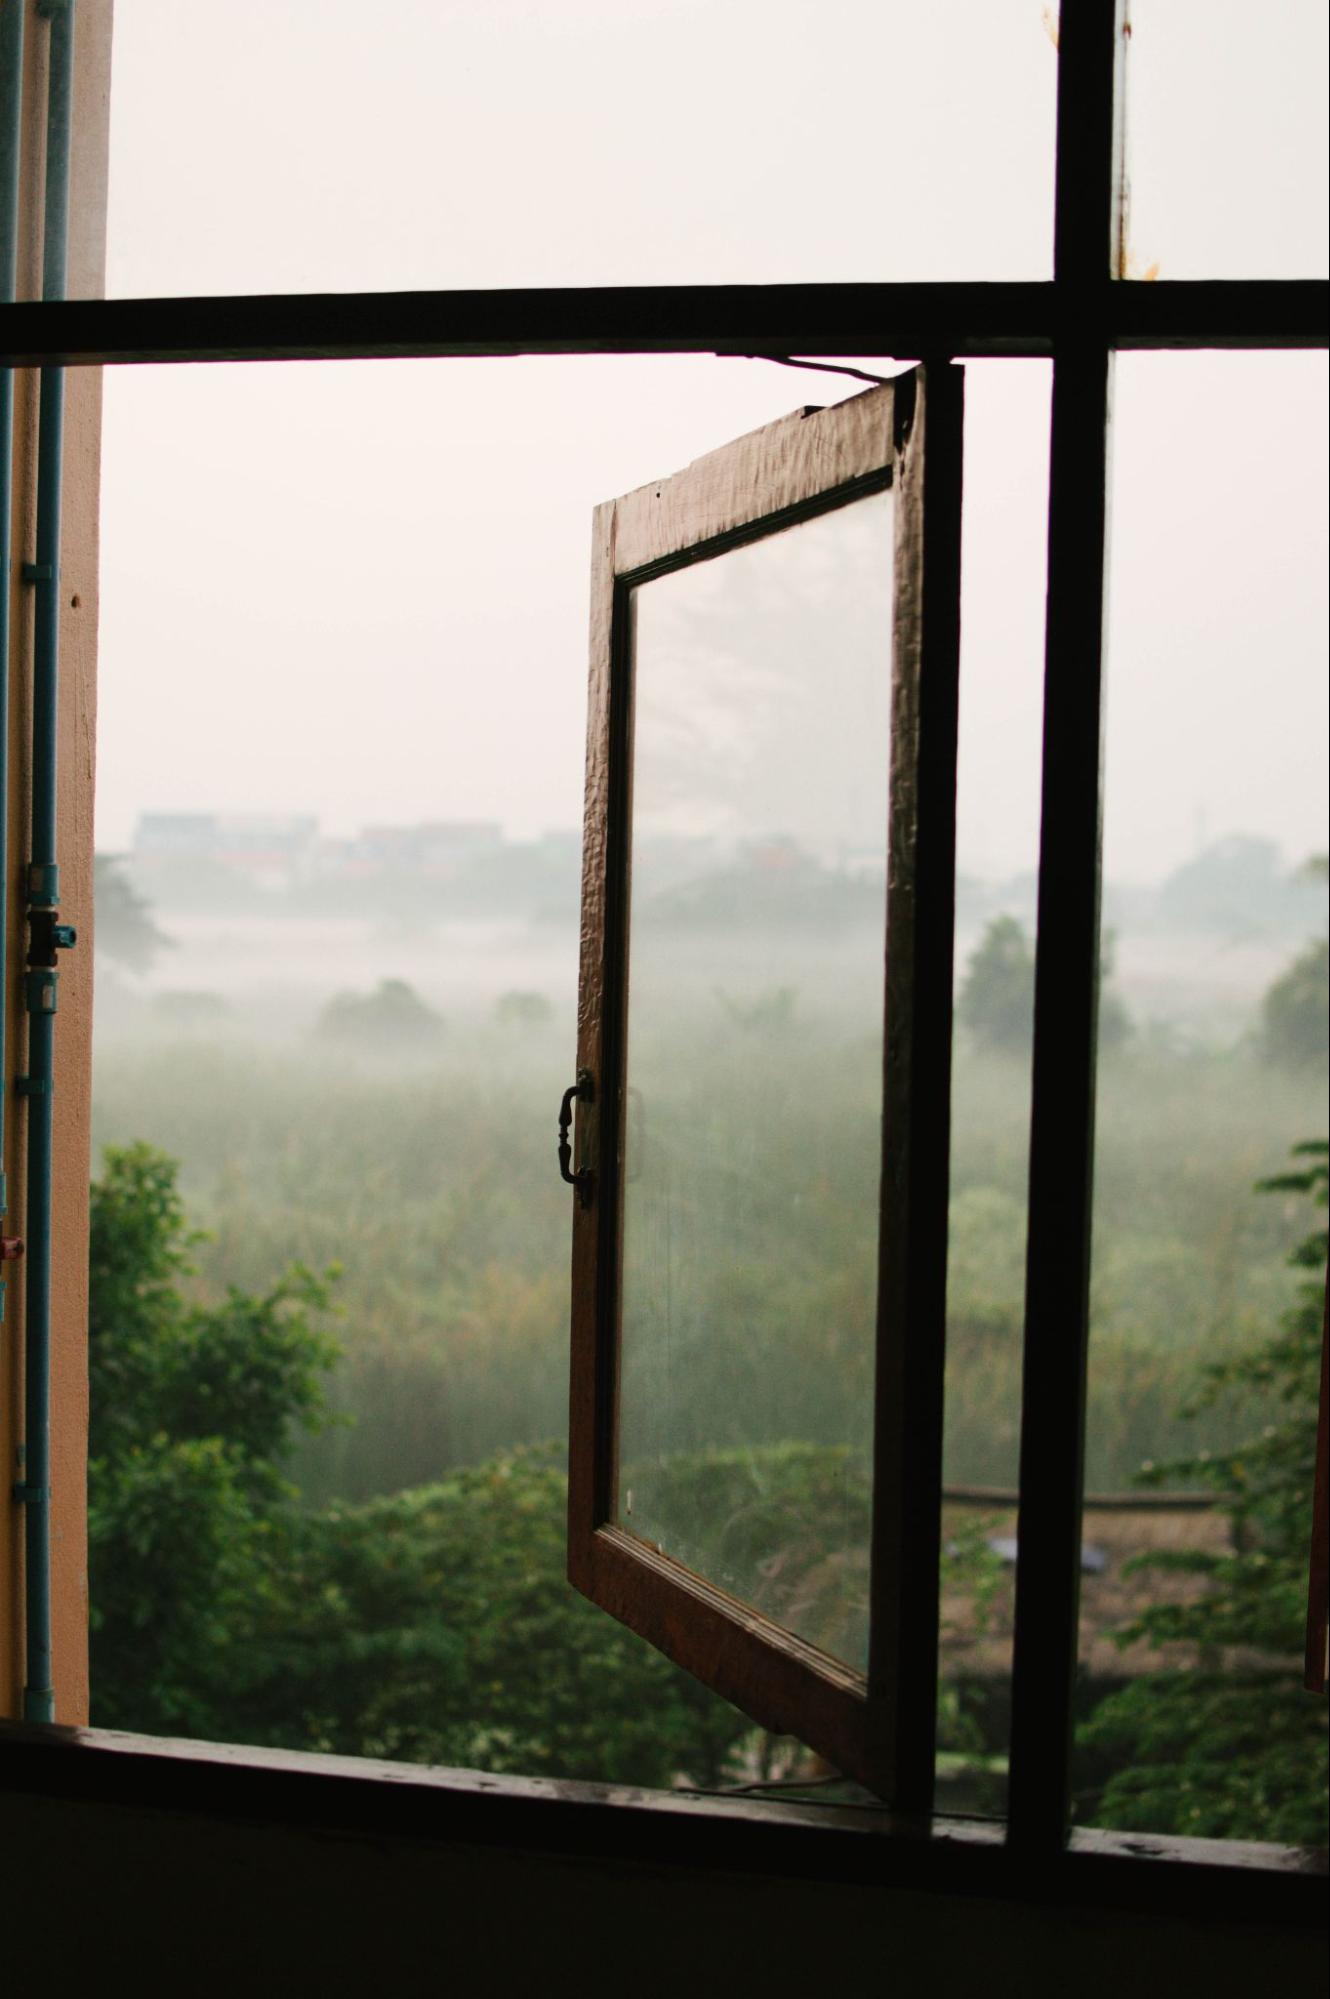 Misty landscape through a window